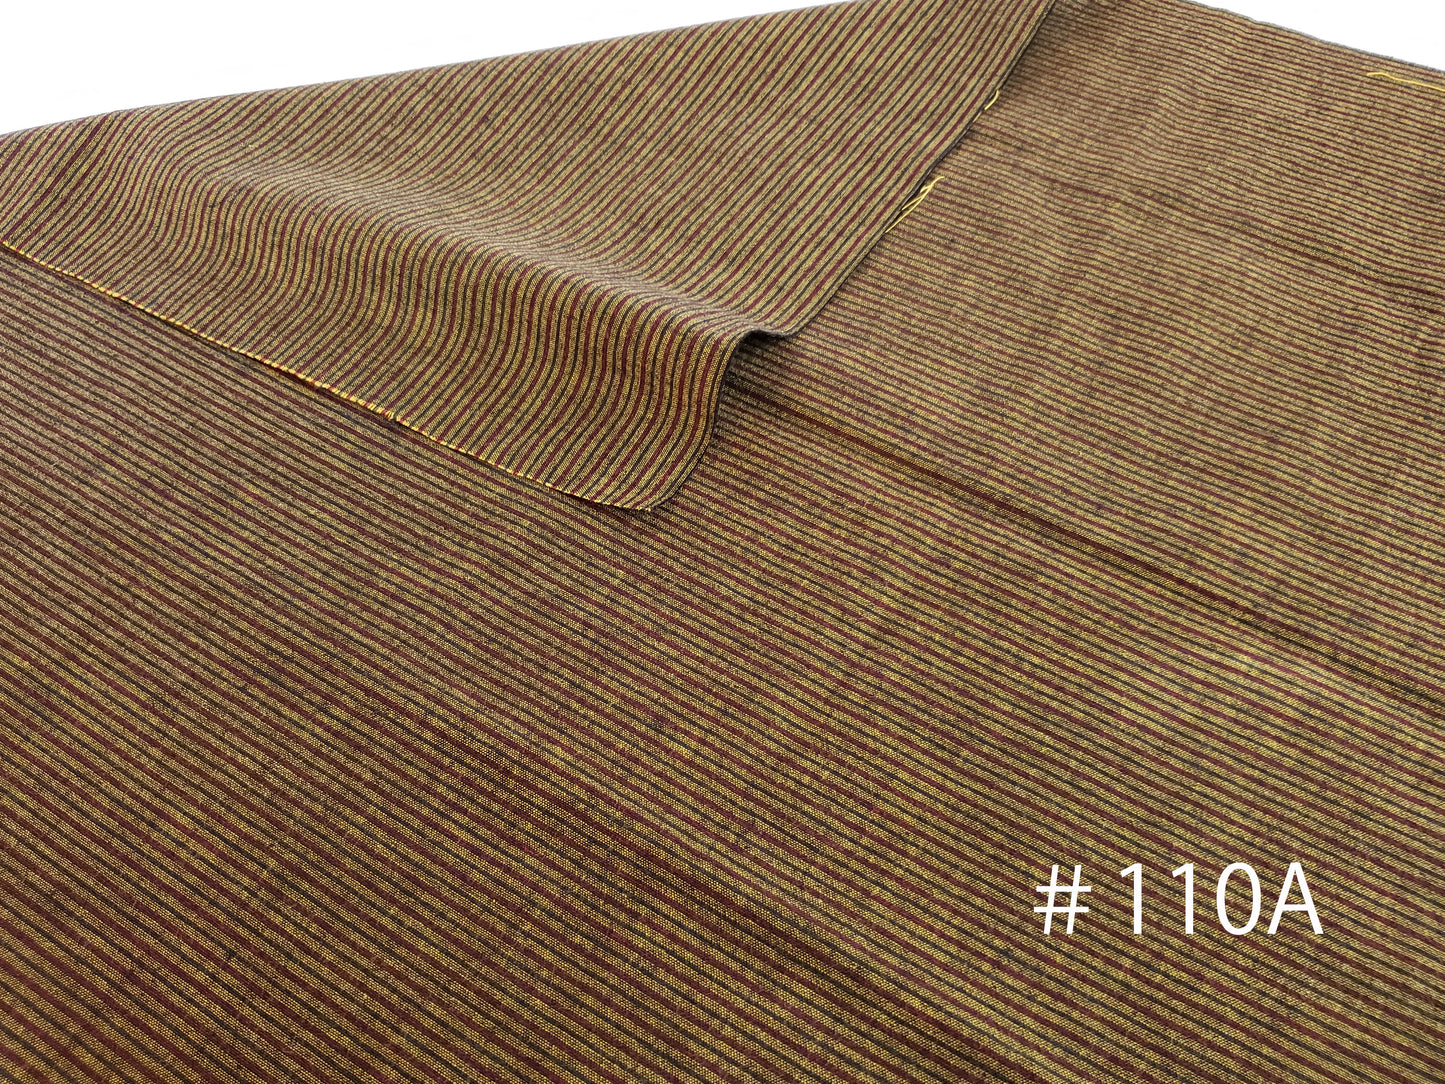 Kameda striped cotton fabric thin fabric # 110 AB 2 patterns